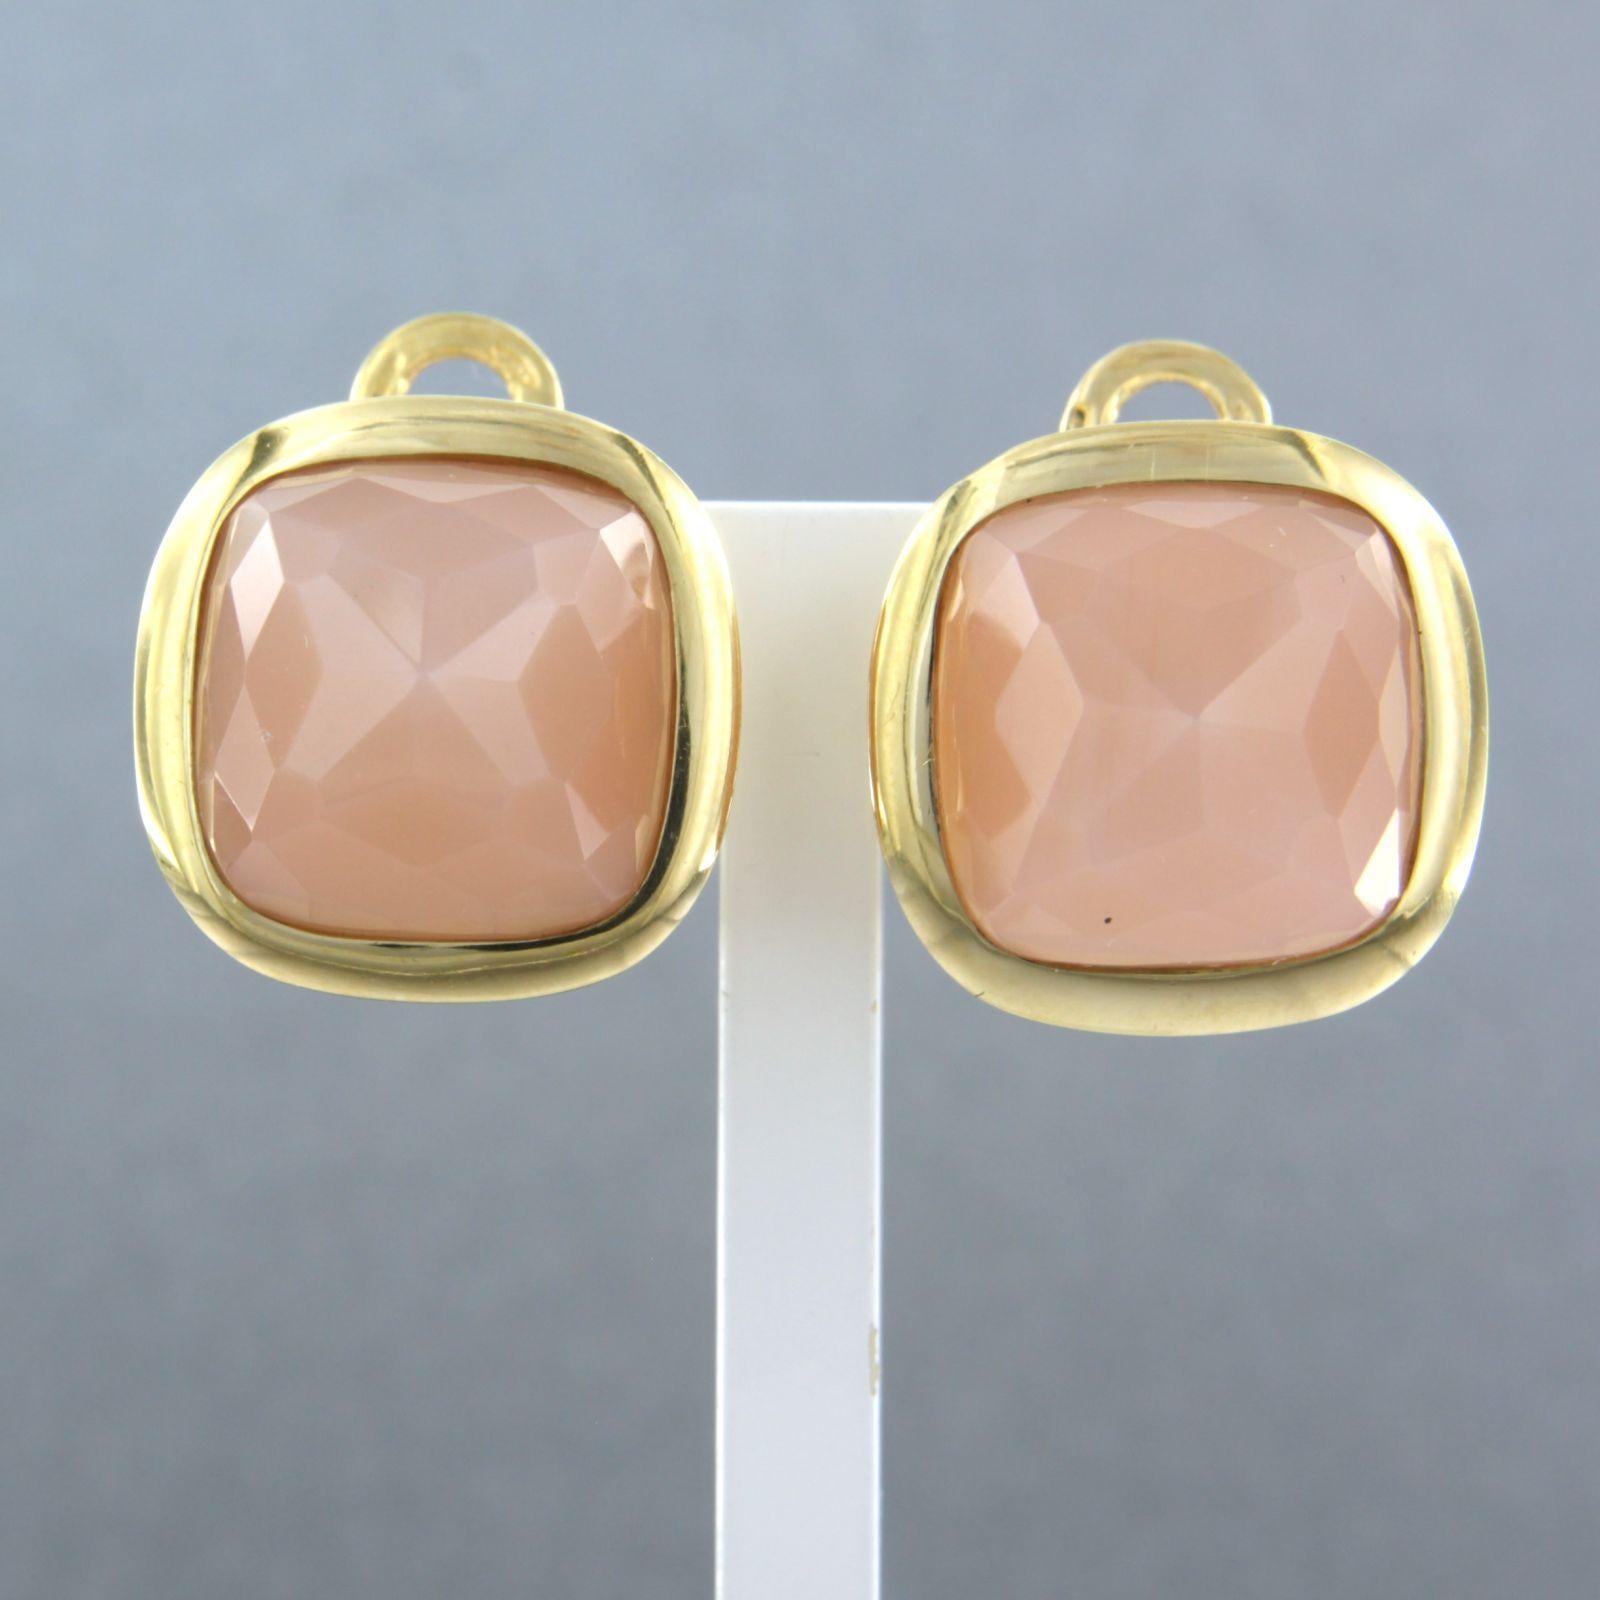 18k yellow gold ear clips set with pink quartz - size 1.8 cm x 1.8 cm

detailed description

the size of the ear clip is 1.8 cm long by 1.8 cm wide

weight 17.5 grams

occupied with

- 2 x 1.4 cm x 1.4 cm square facet cut rose quartz

color: